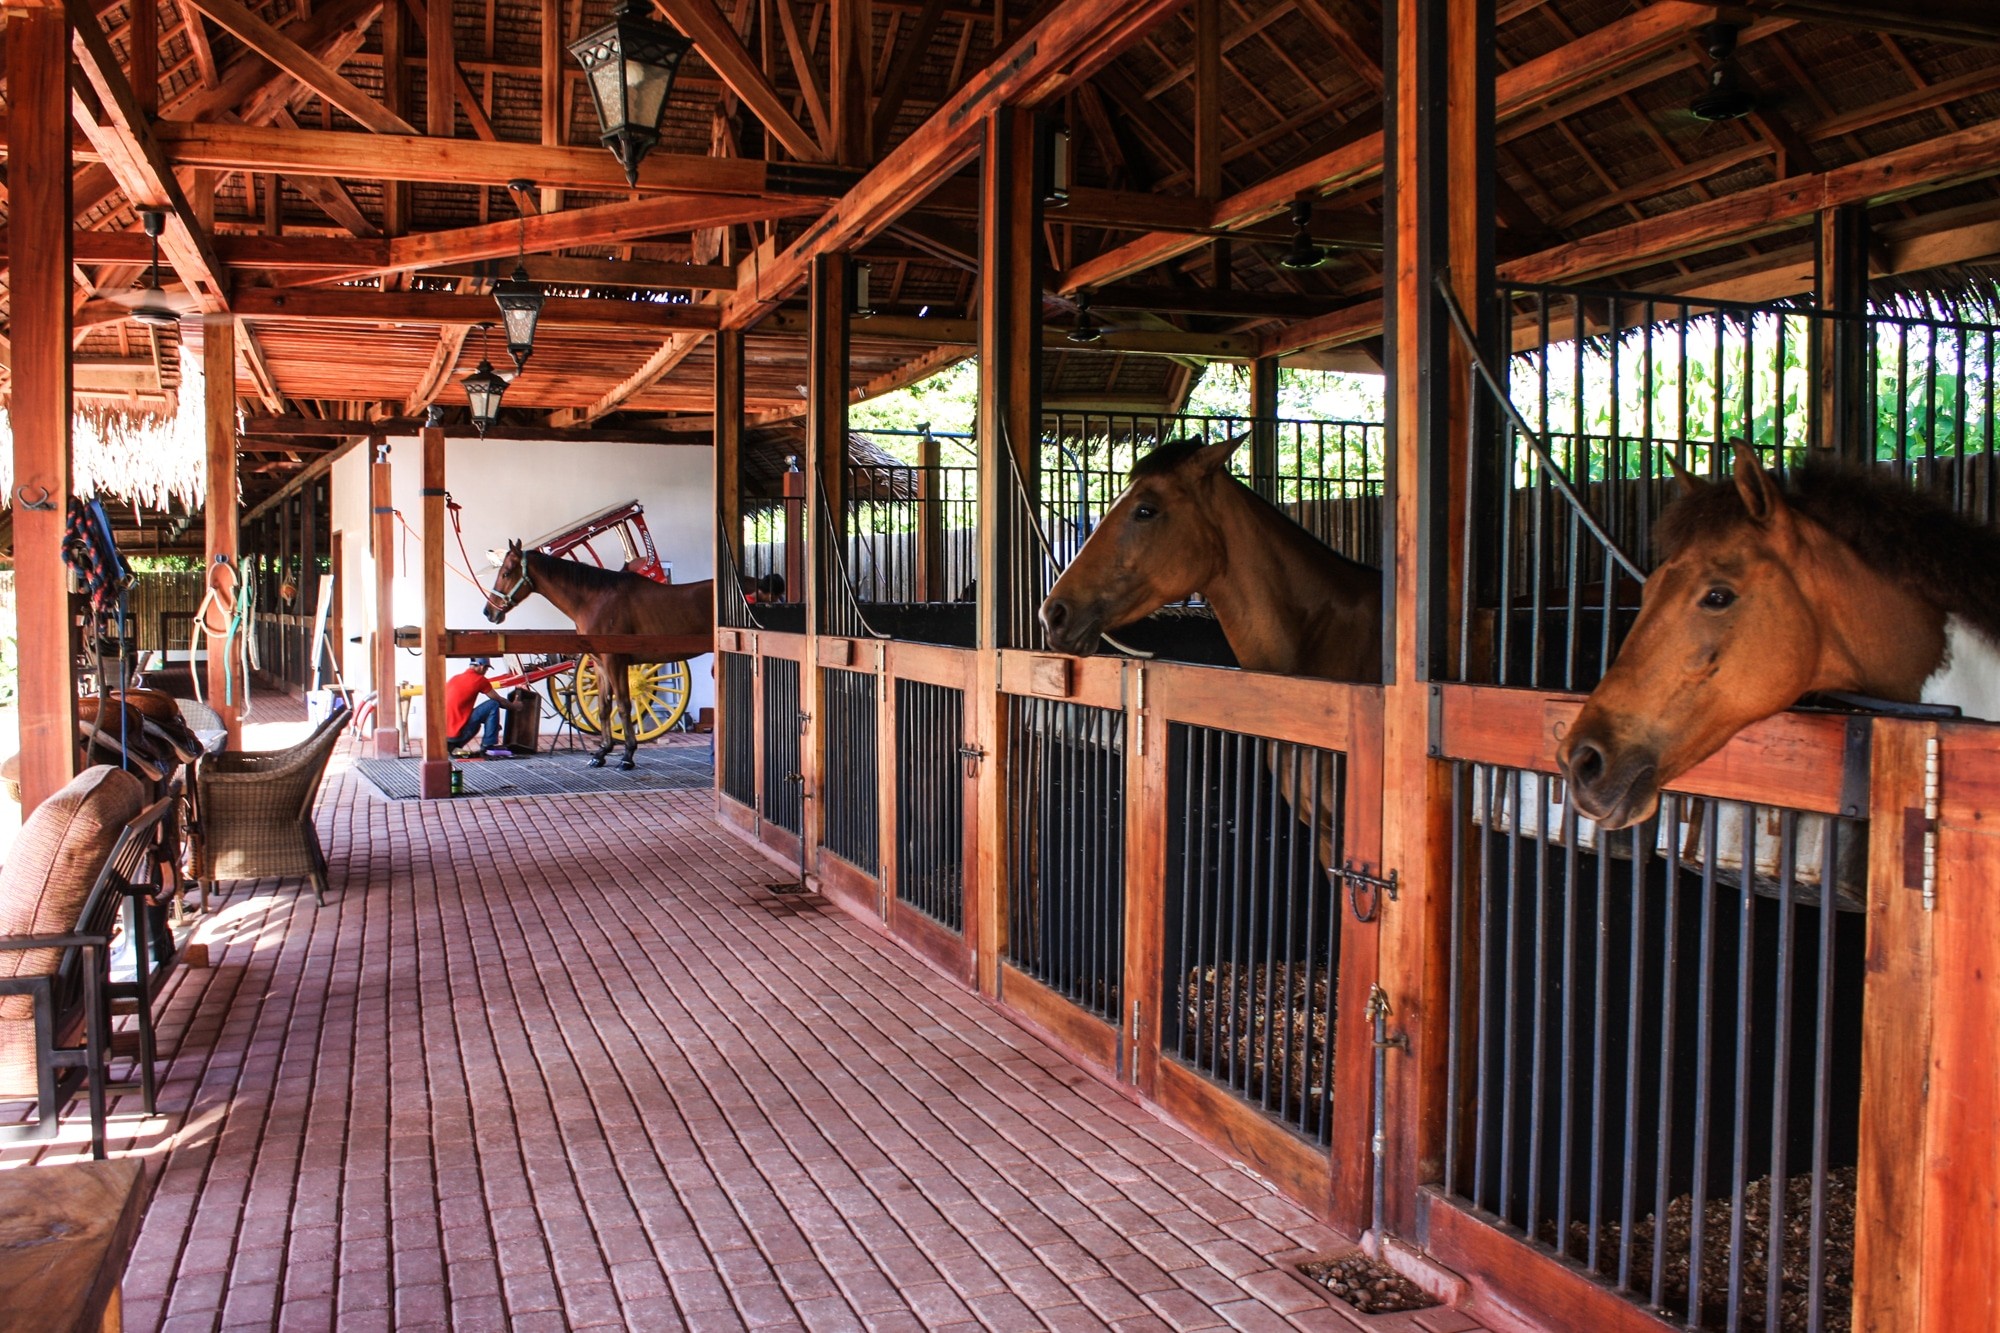 Donatela resort in Bohol - The equestrian center